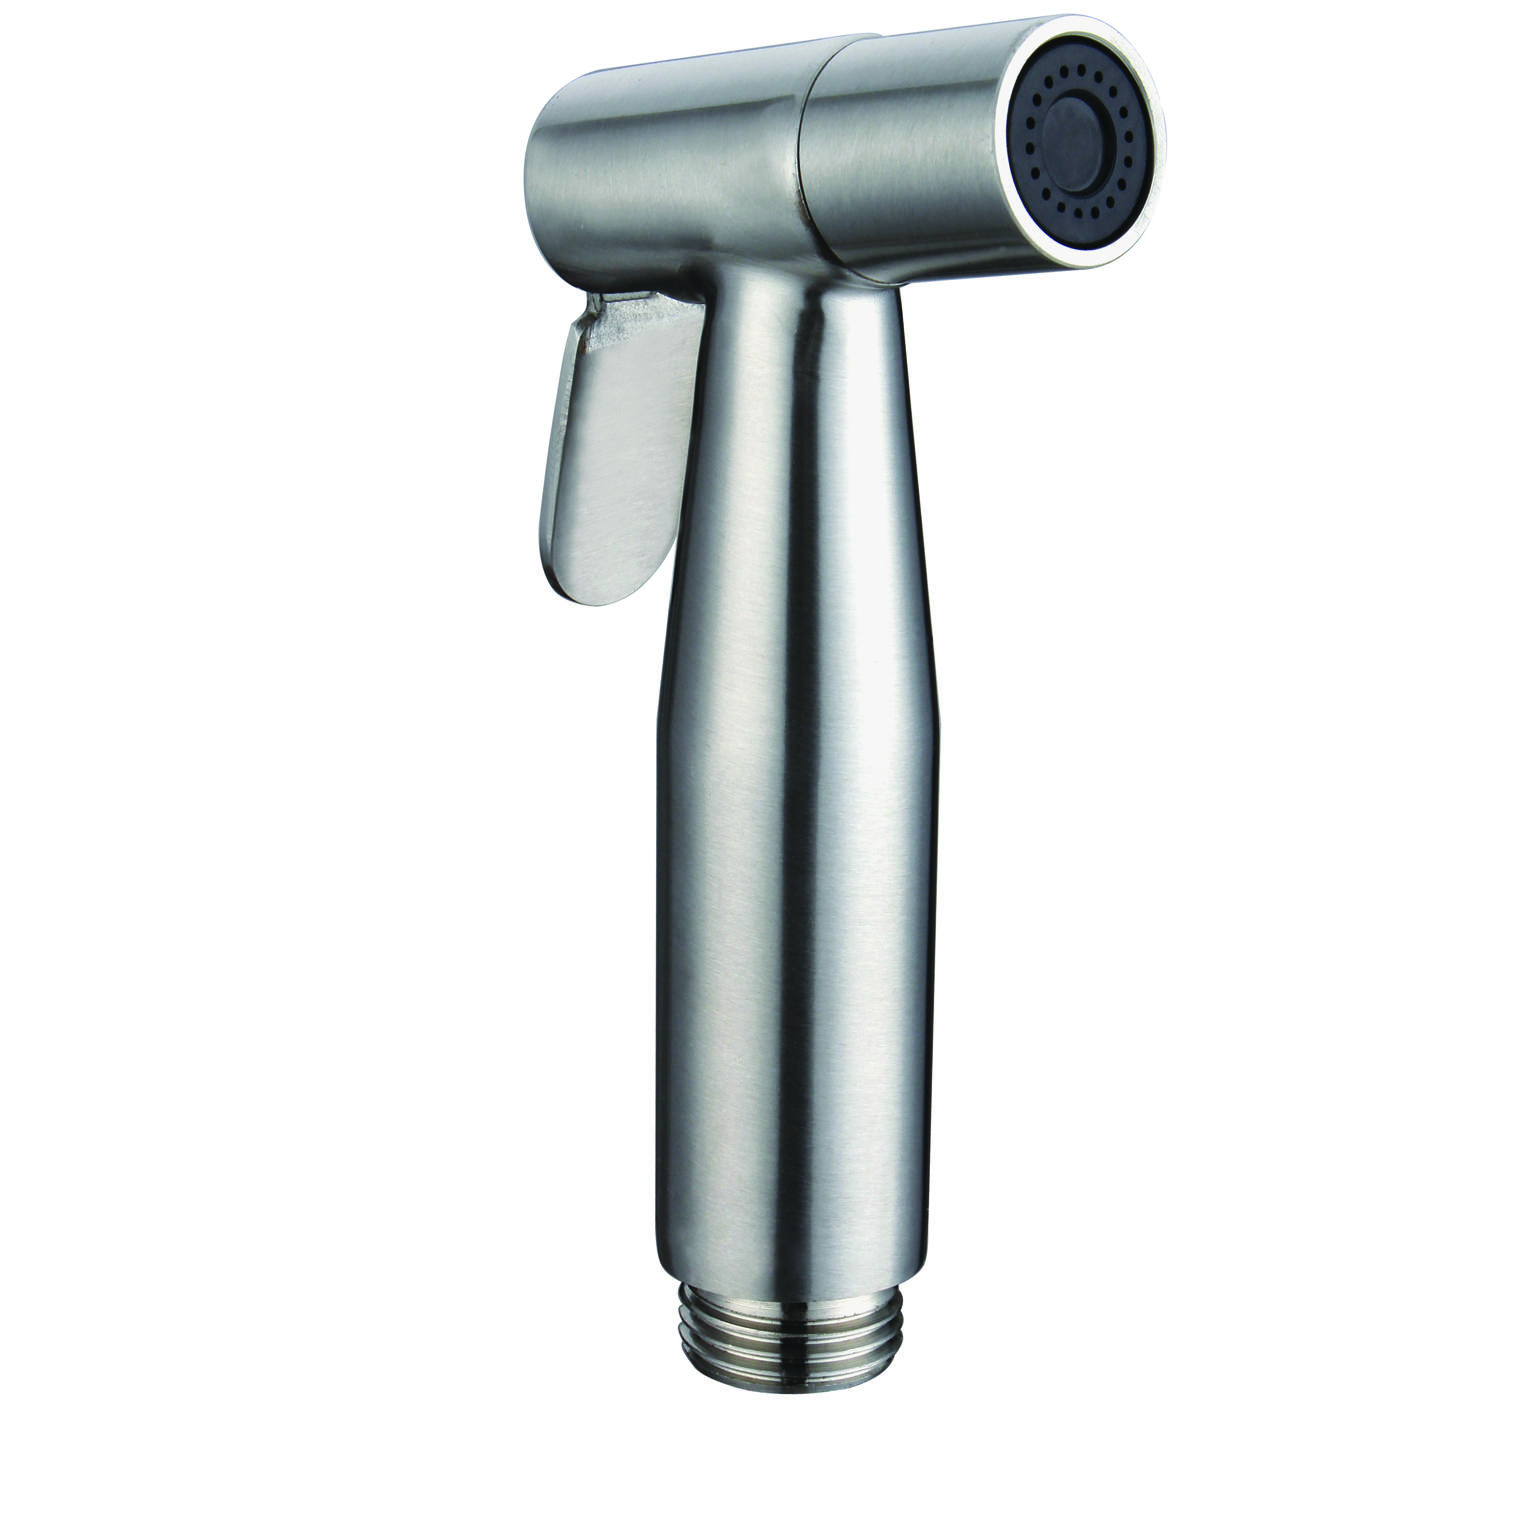 YS36710	SUS304 shataff, bidet sprayer, Handheld Toilet sprayer, Portable Shataff Personal Cleansing Sprayer With Lever